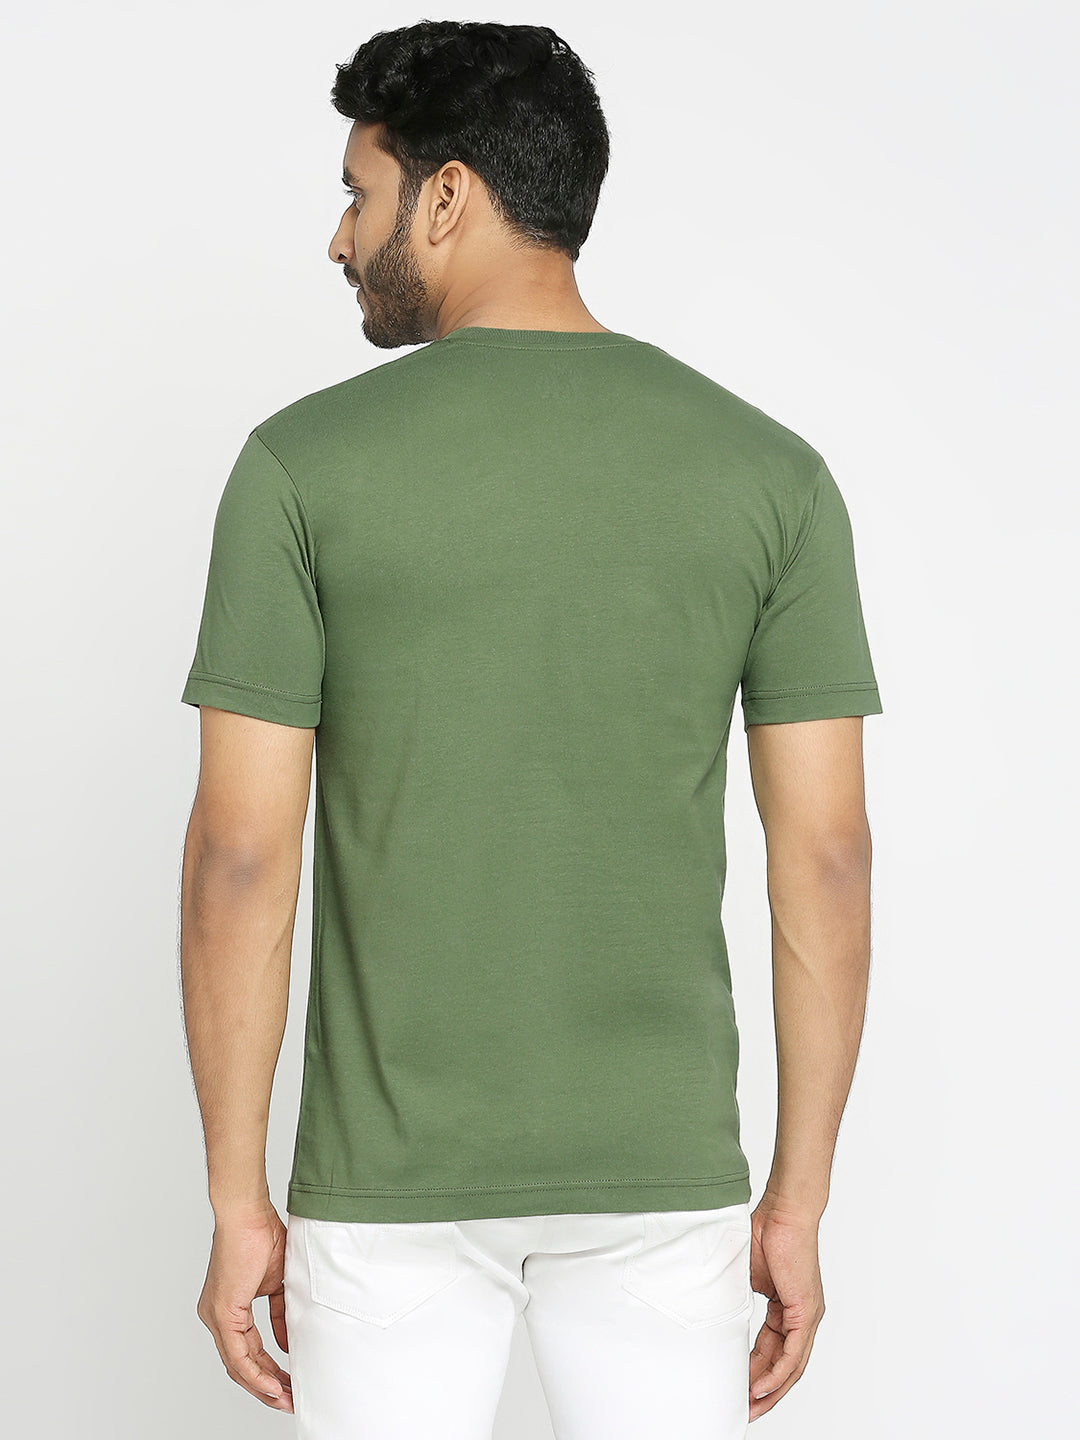 VIP Mens Green Colour Round Neck T-Shirt